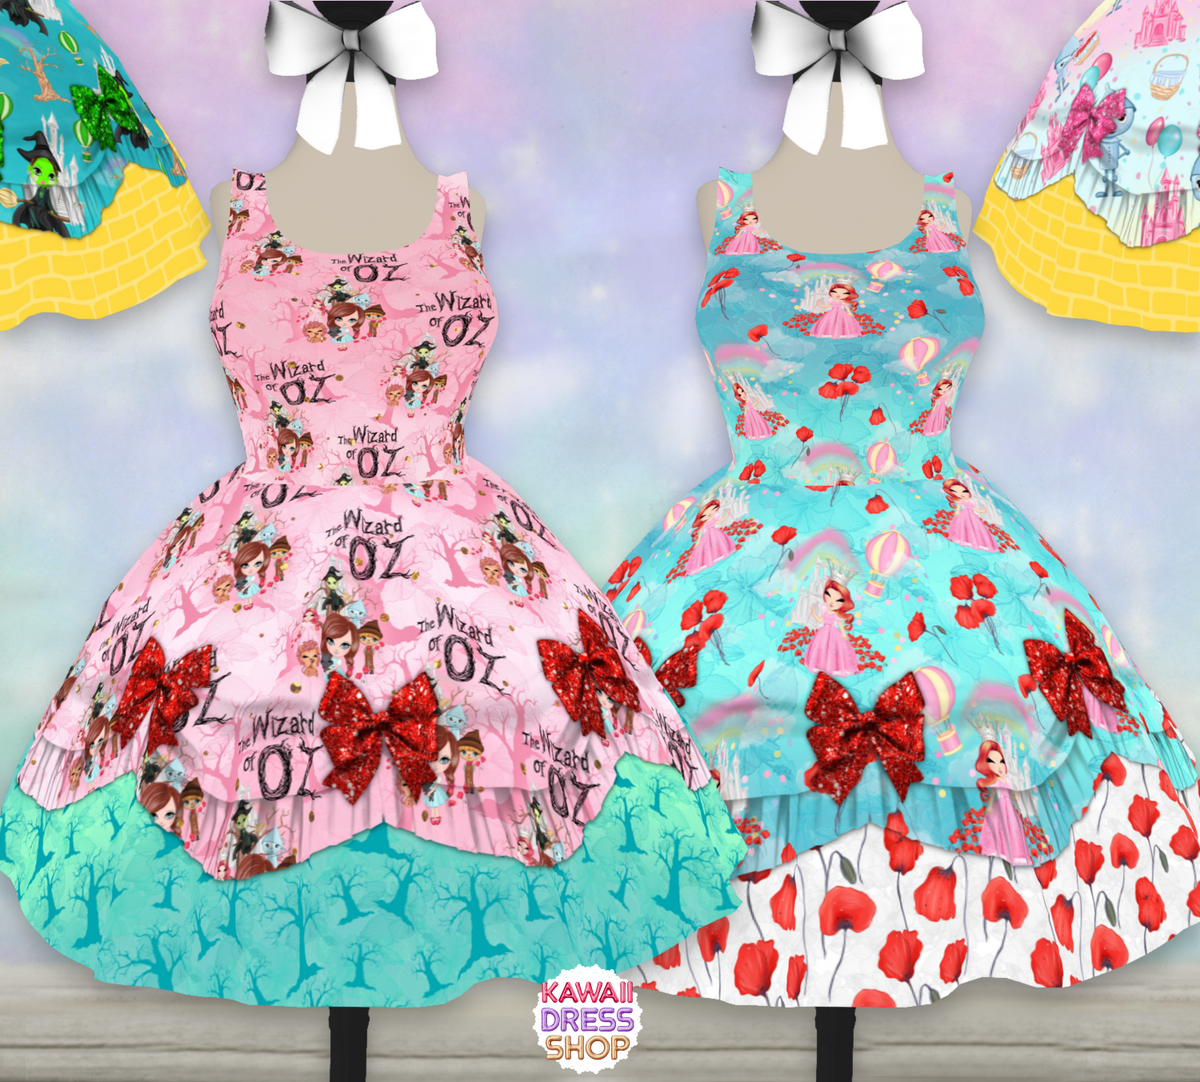 Wizard of Oz Collection – Kawaii Dress Shop